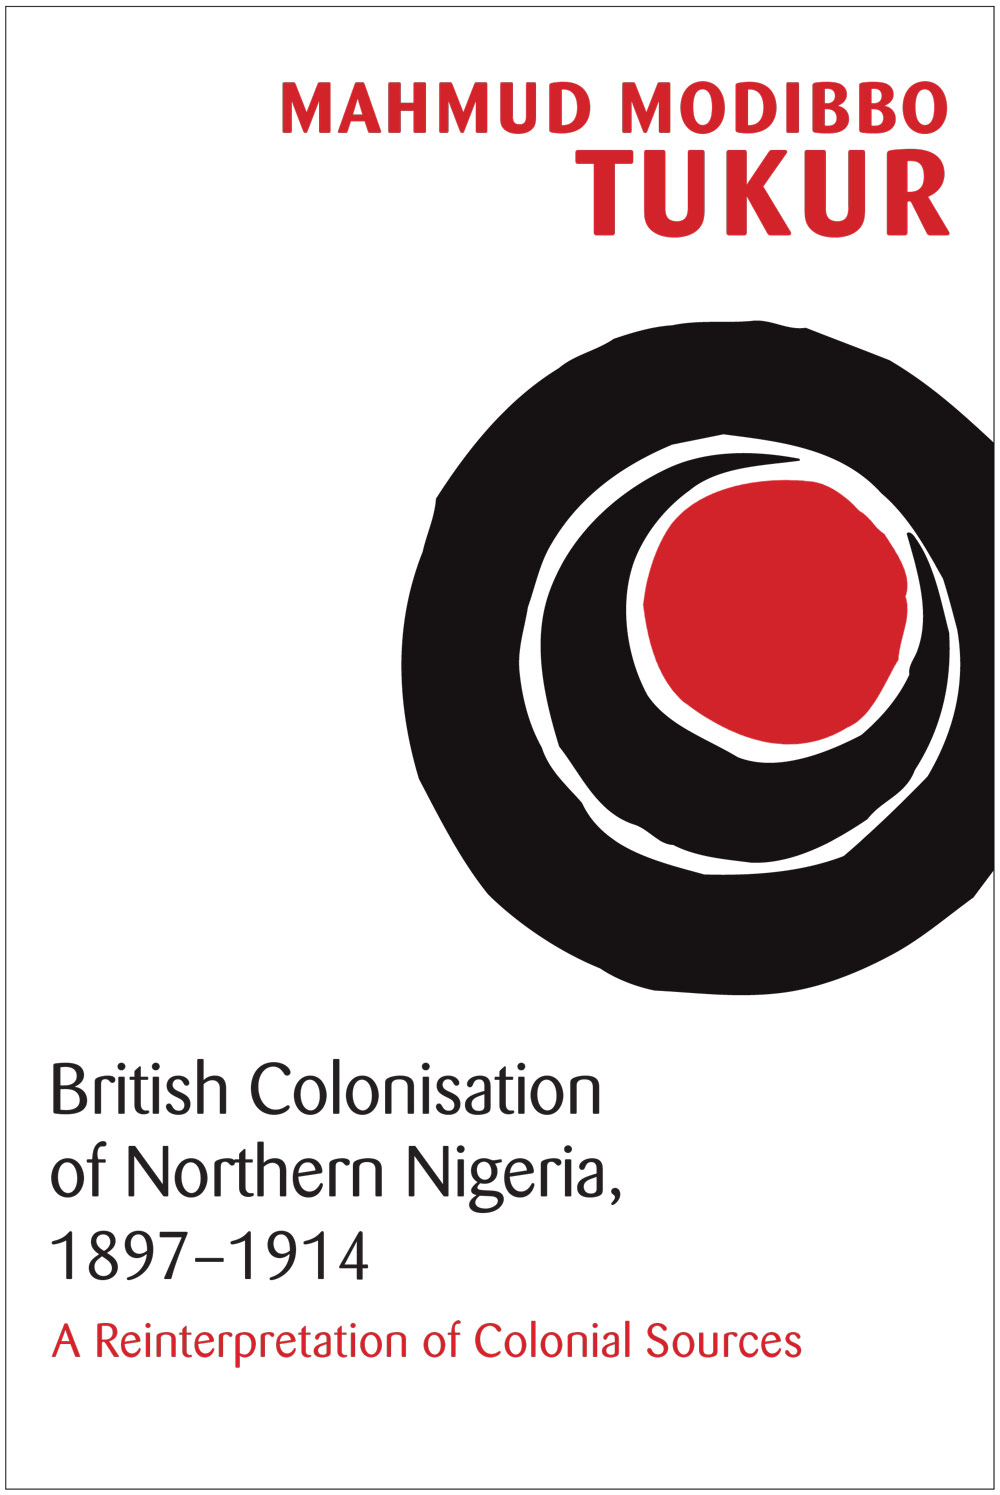 British Colonisation of Northern Nigeria, 1897-1914